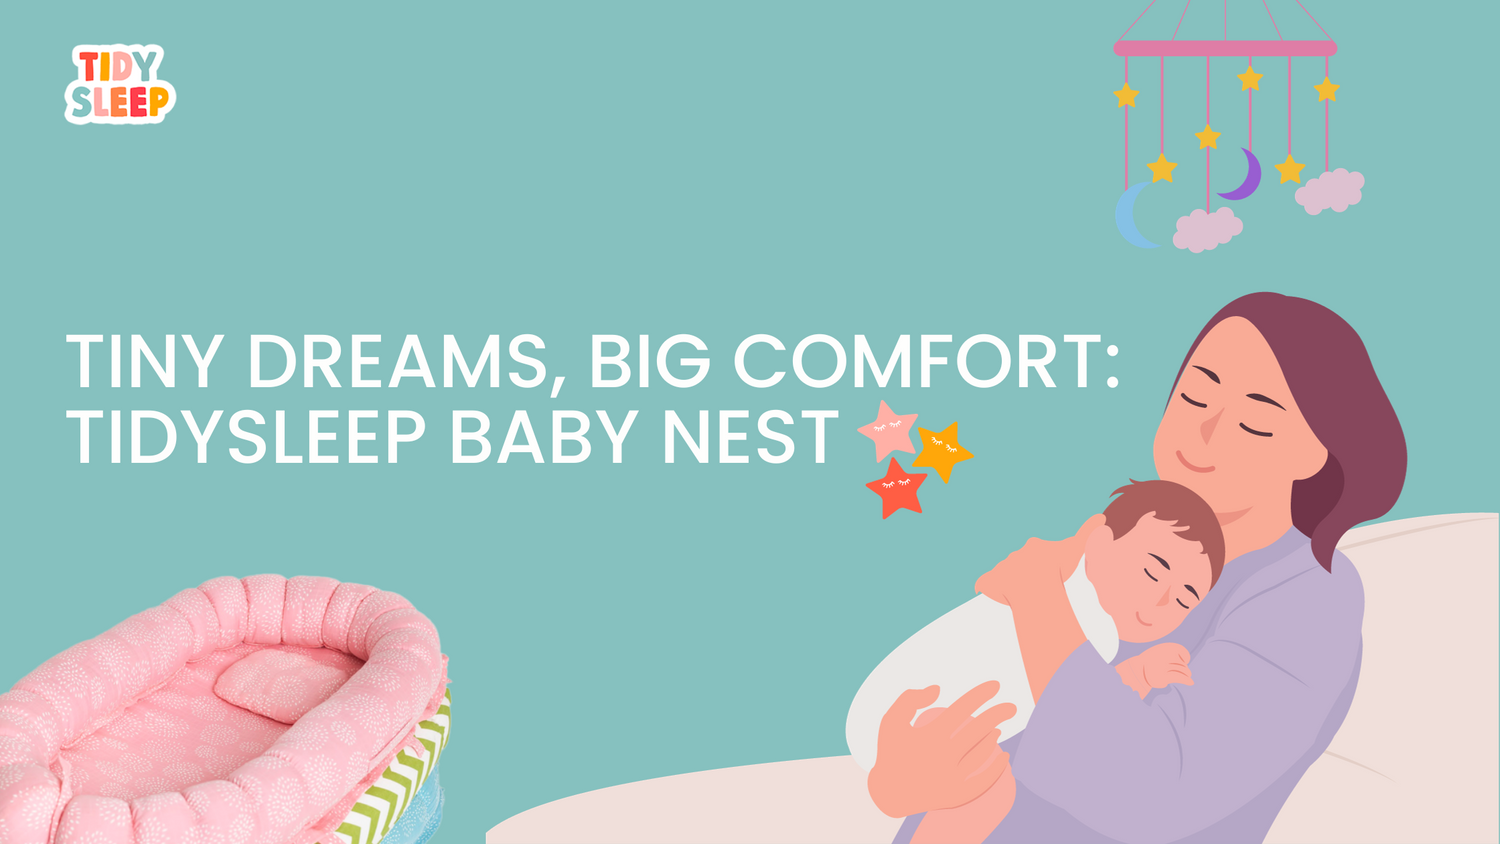 Nestled in Comfort: Tidy Sleep's Baby Nest